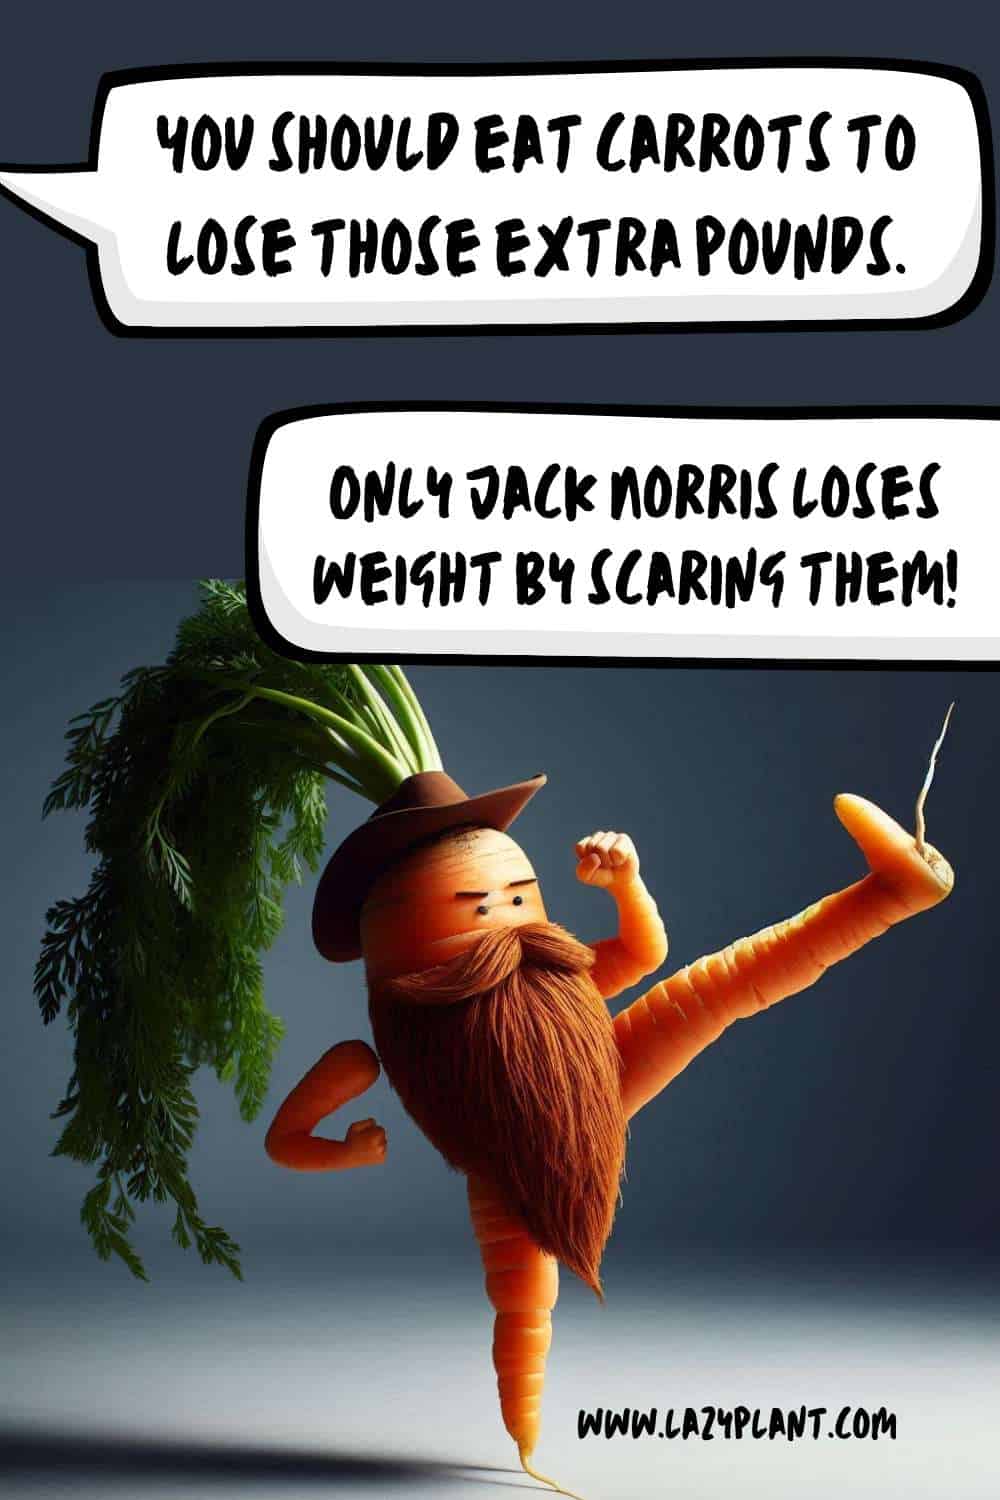 Funny | Meme | Jokes Carrots for Weight Loss